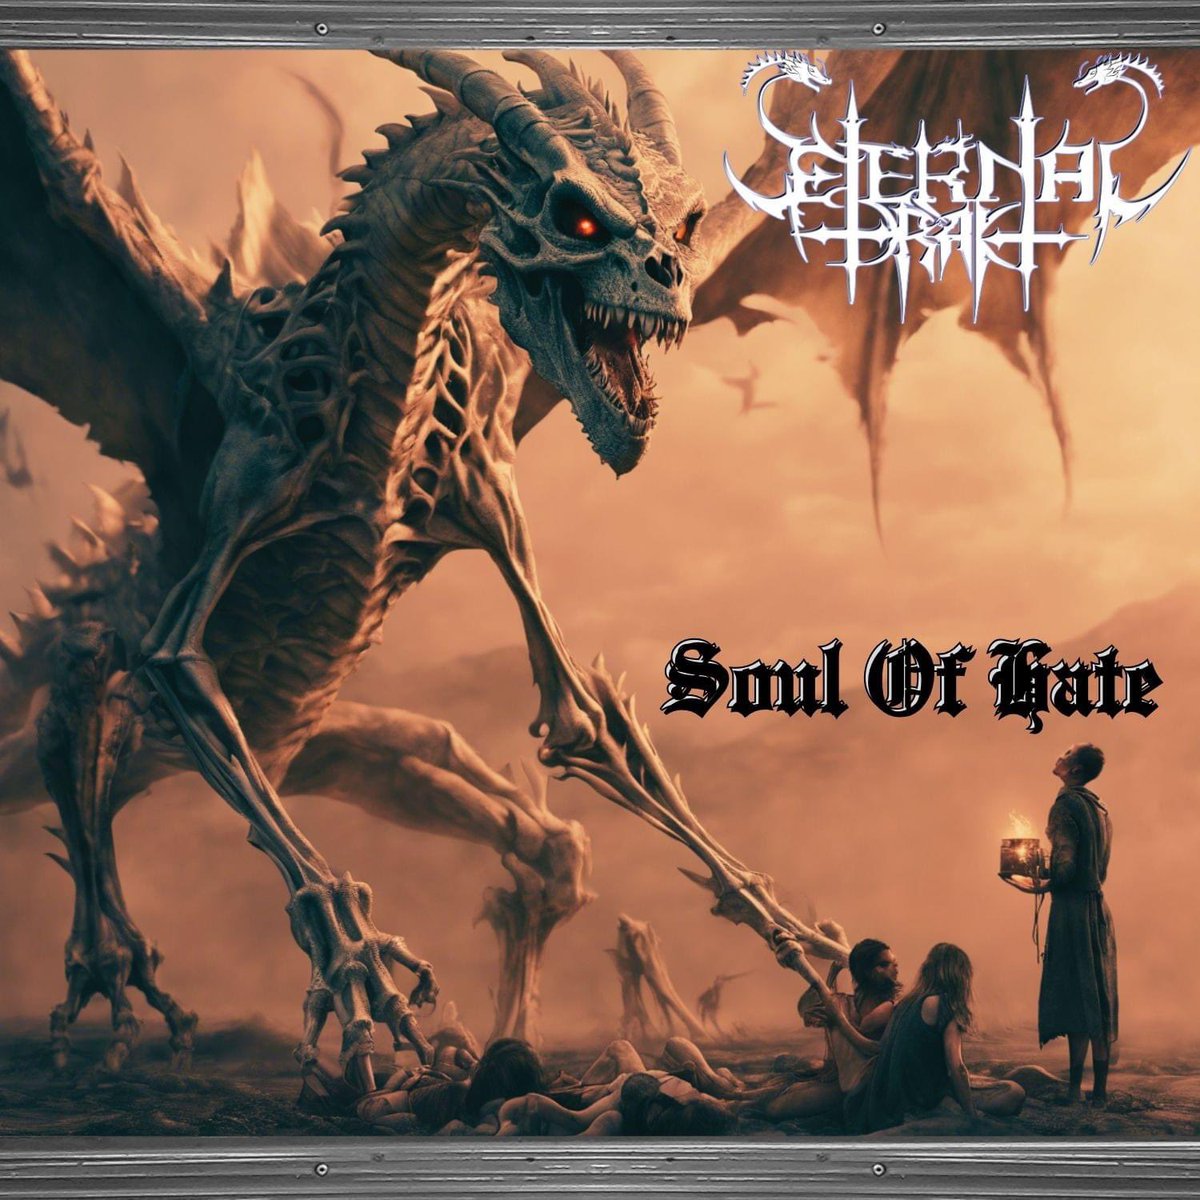 It’s out today, Soul Of Hate Our last single released today. Listen now⬇️⬇️ eternaldrak.com/soul-of-hate #thrashmetal #blackmetal @FirstwaveStudio @drakardark1 @AsherMedia #newmetalrelease #metalheads